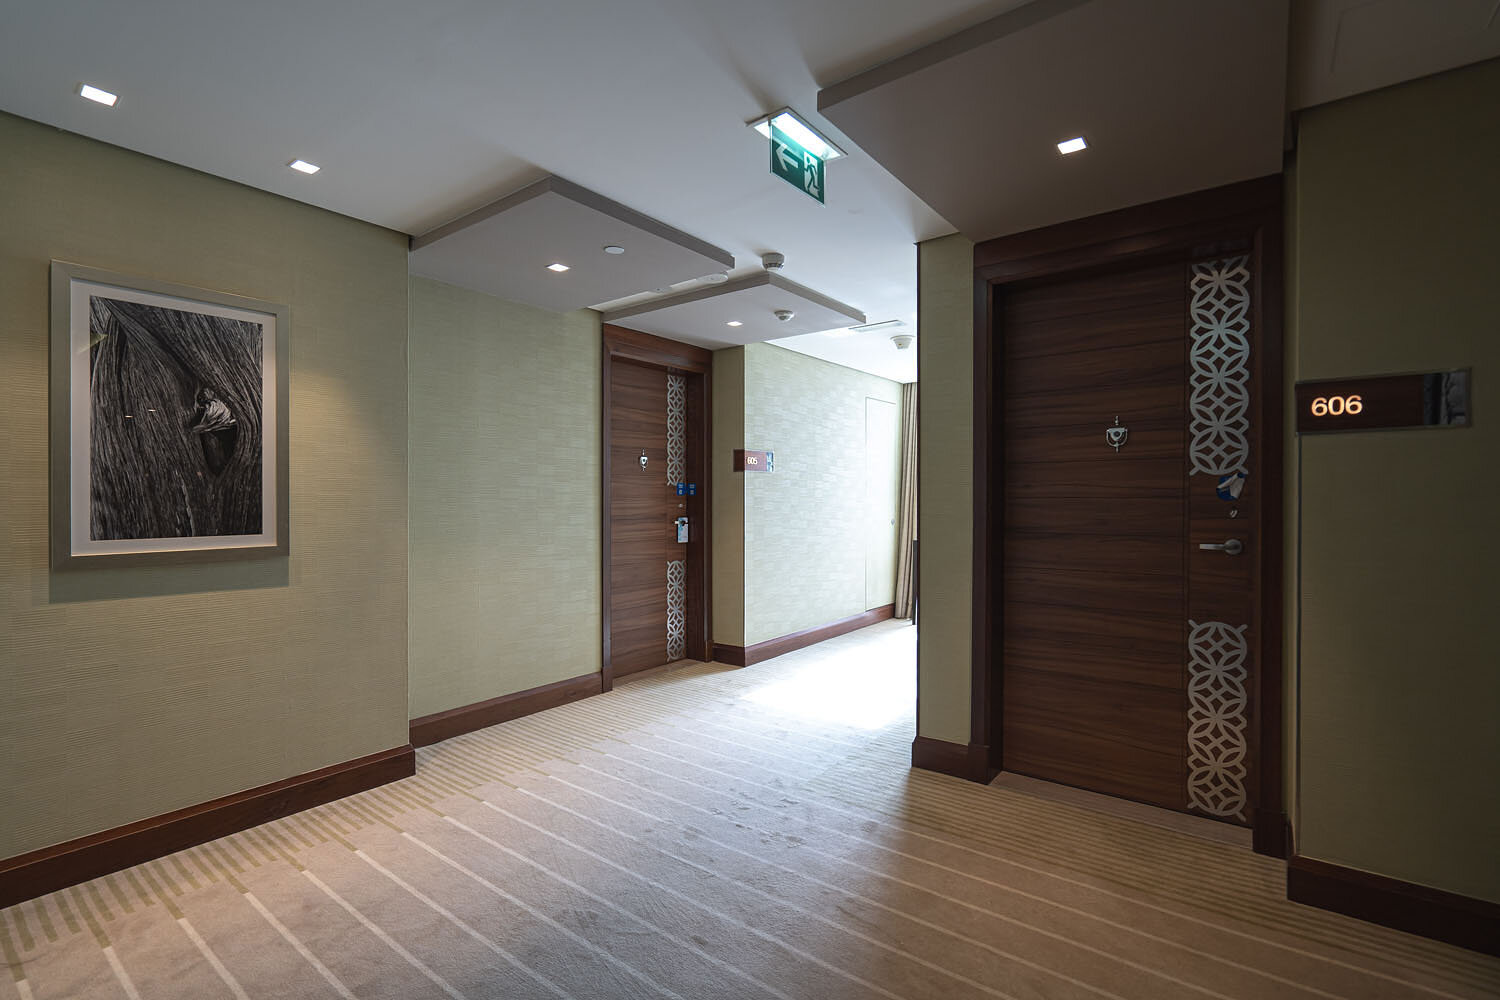  Corridor to the room 